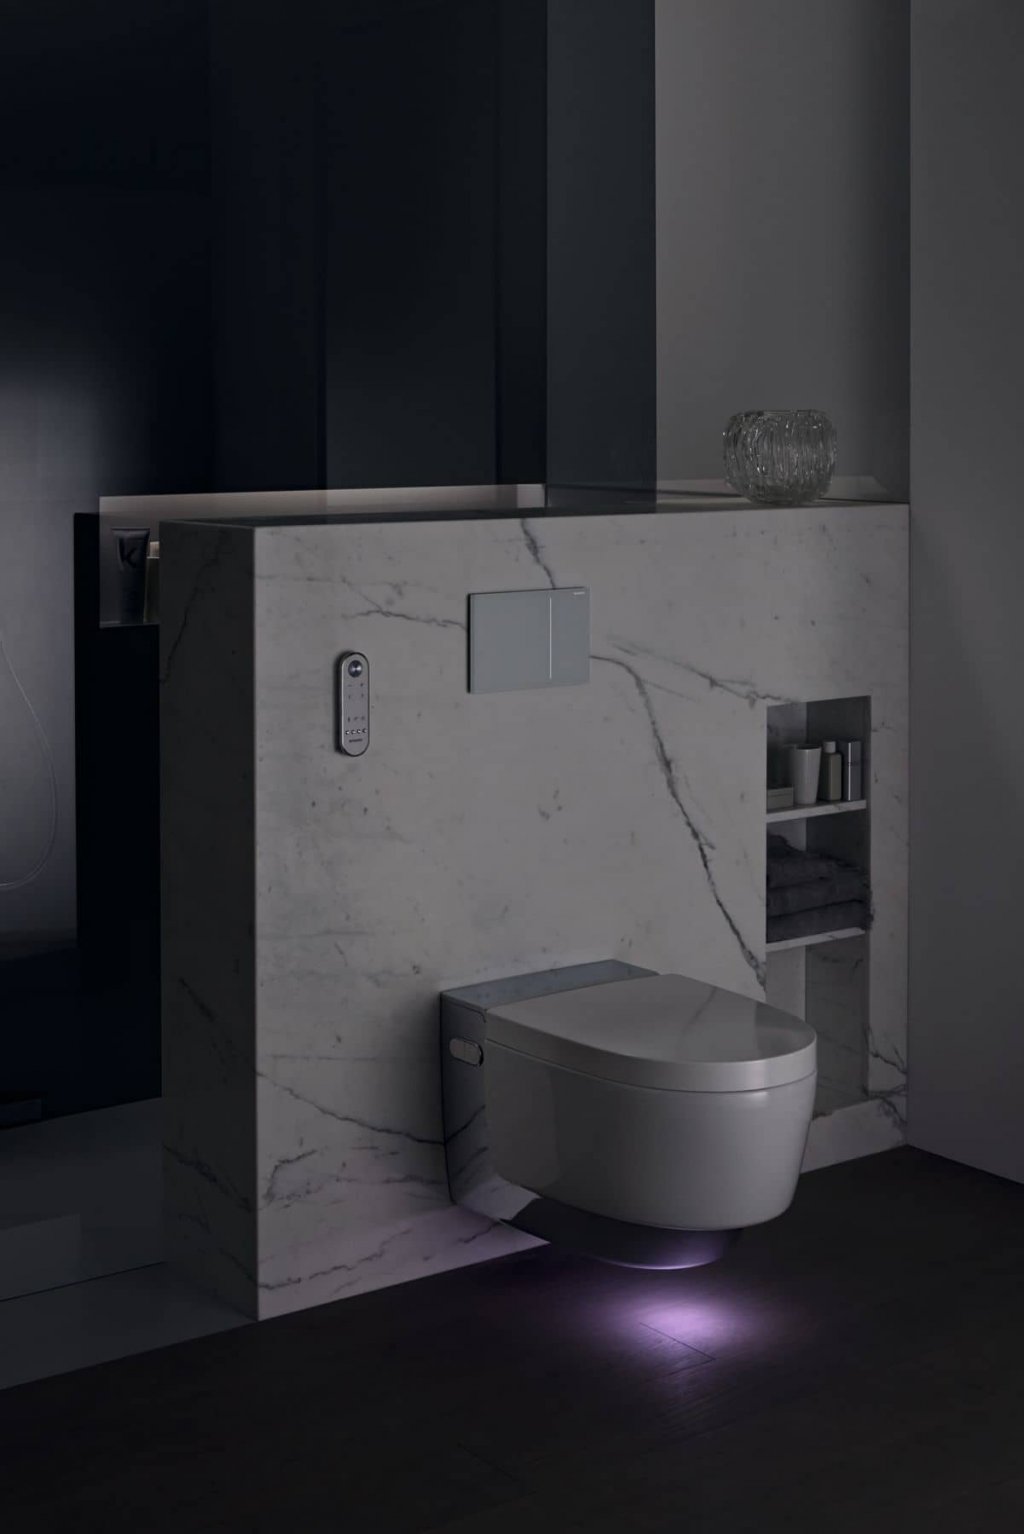 Závěsná elektronická sprchovací toaleta Geberit AquaClean MERA Comfort, alpská bílá